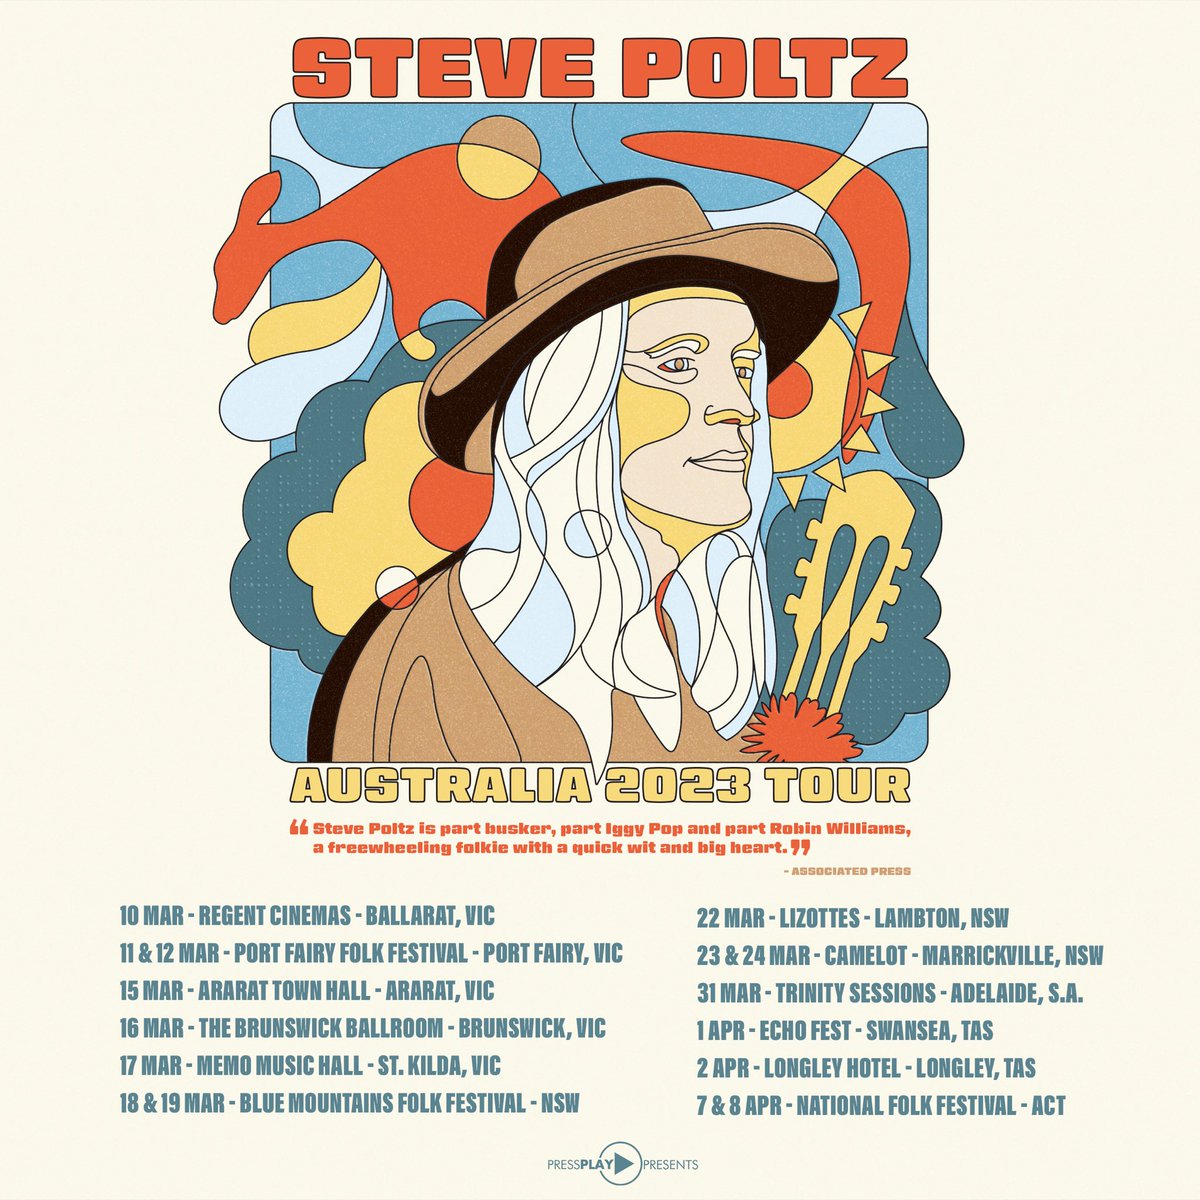 Australia tour dates and tix up at poltz.com